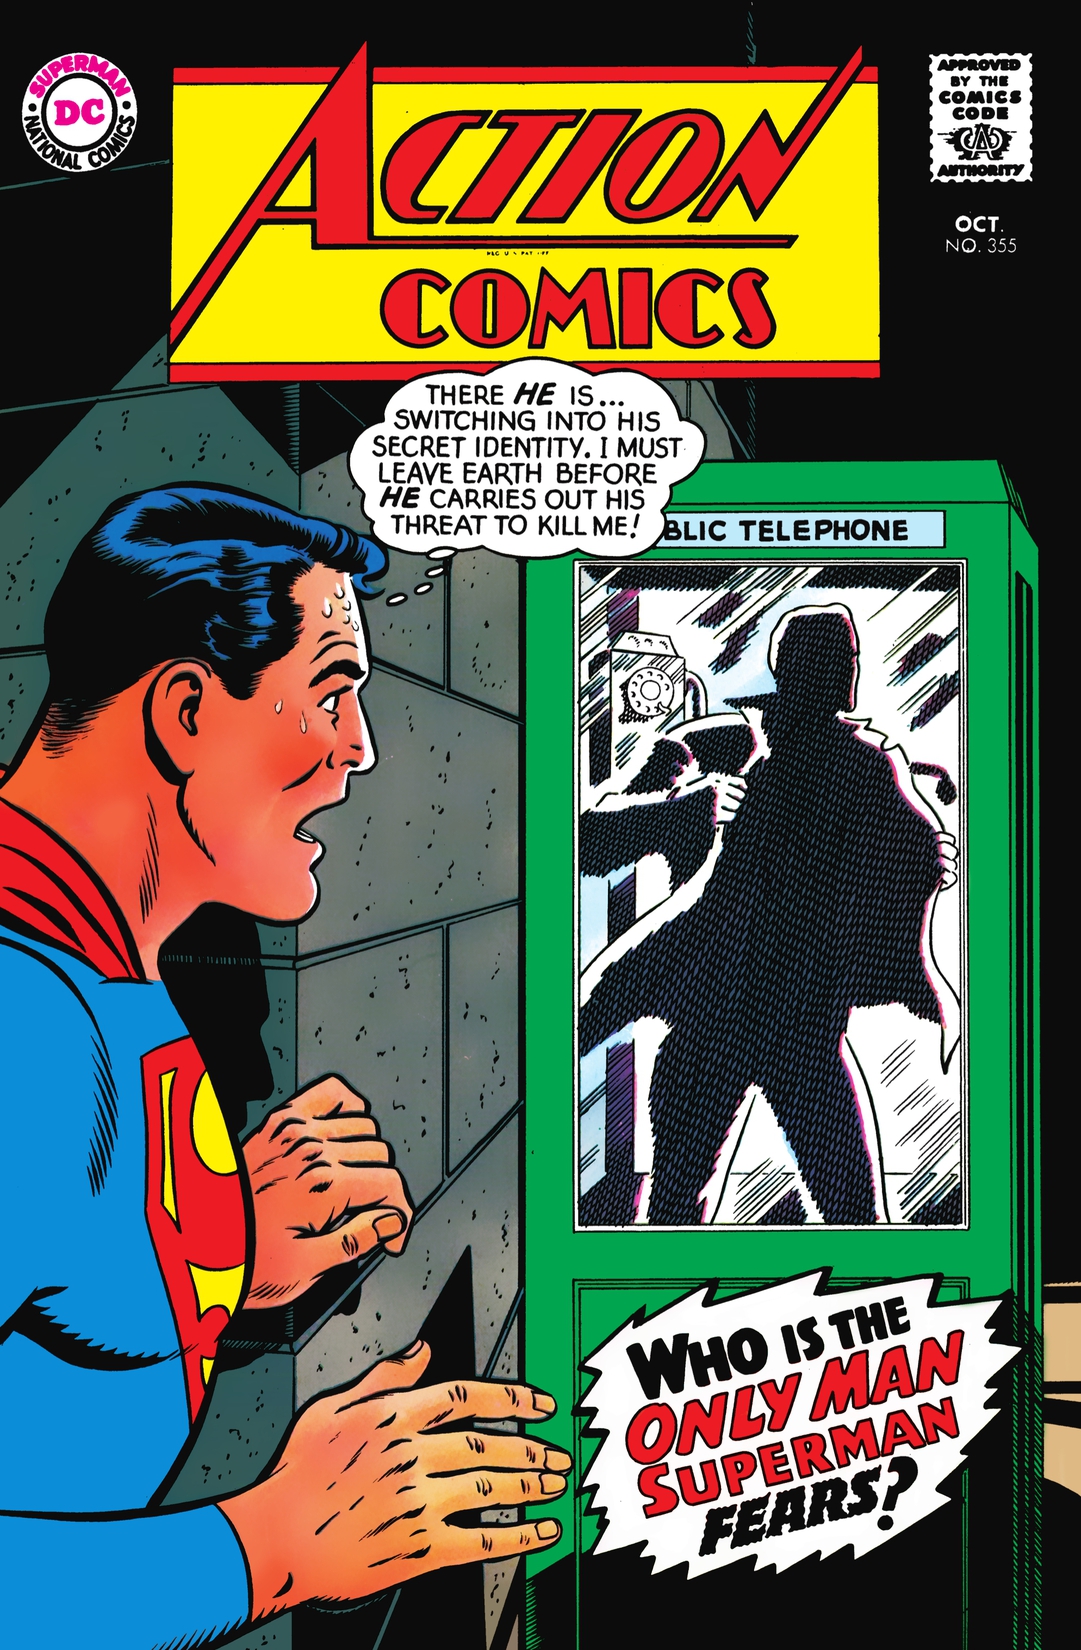 Action Comics (1938-2011) #355 preview images